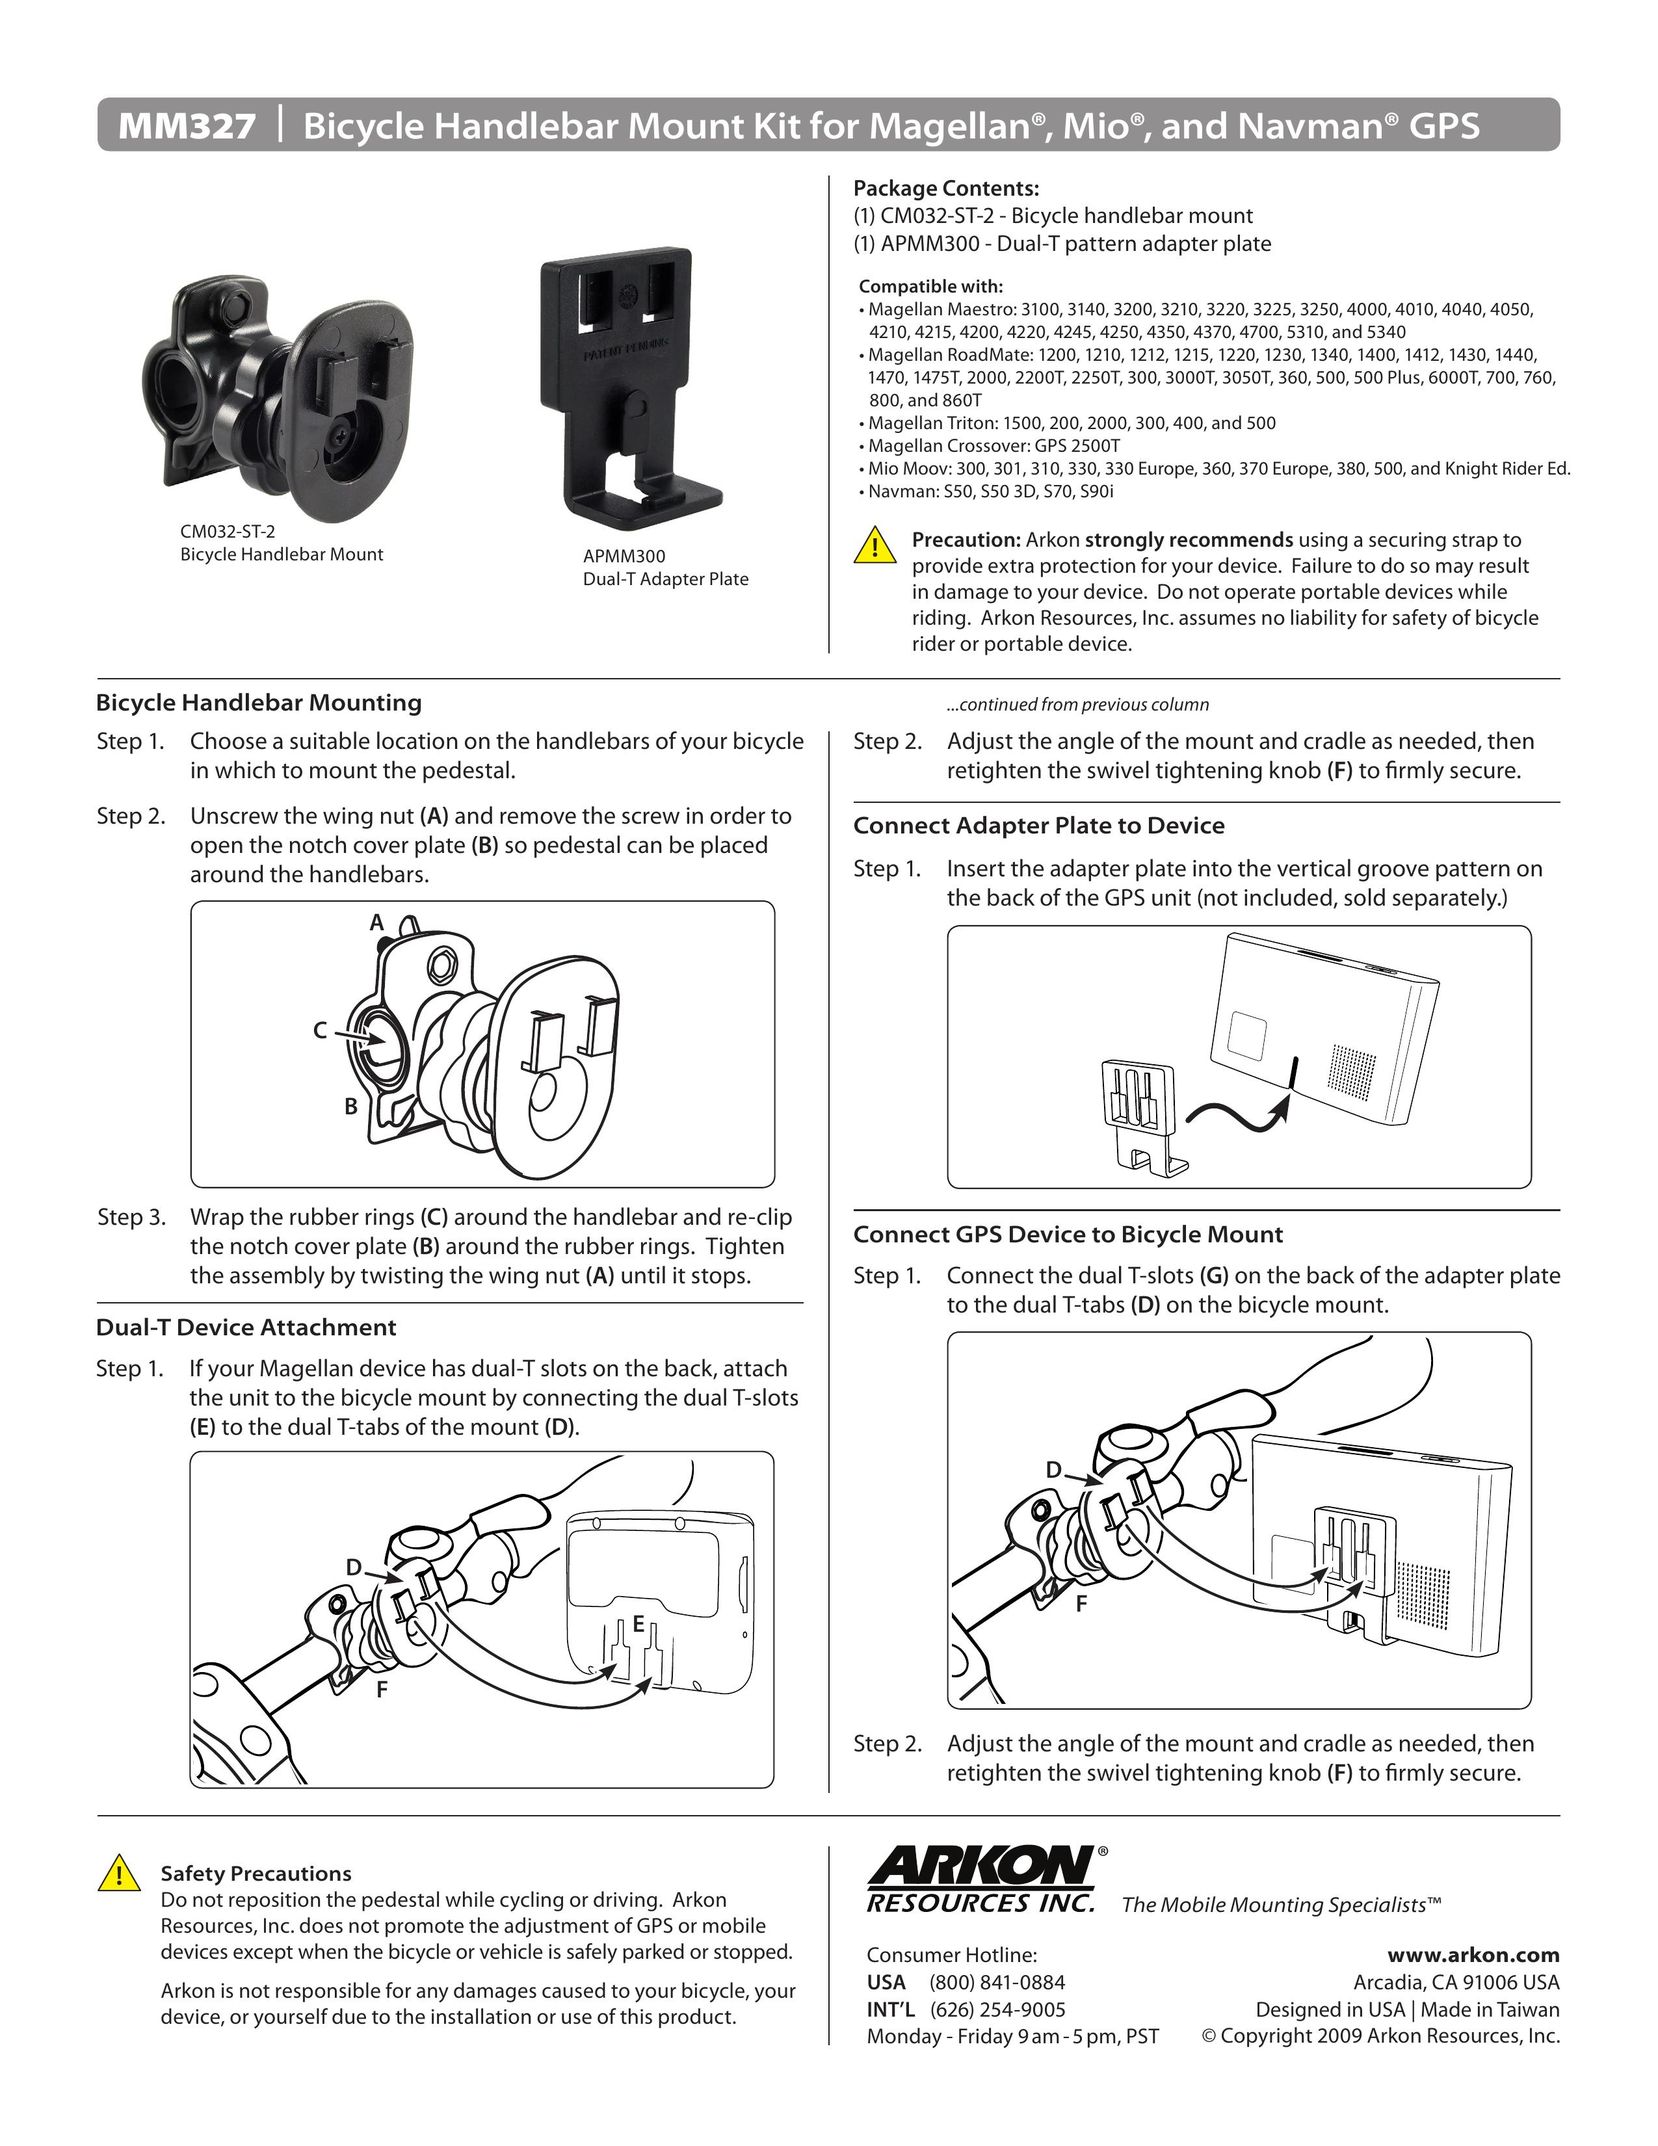 Black & Decker MM327 Bicycle Accessories User Manual